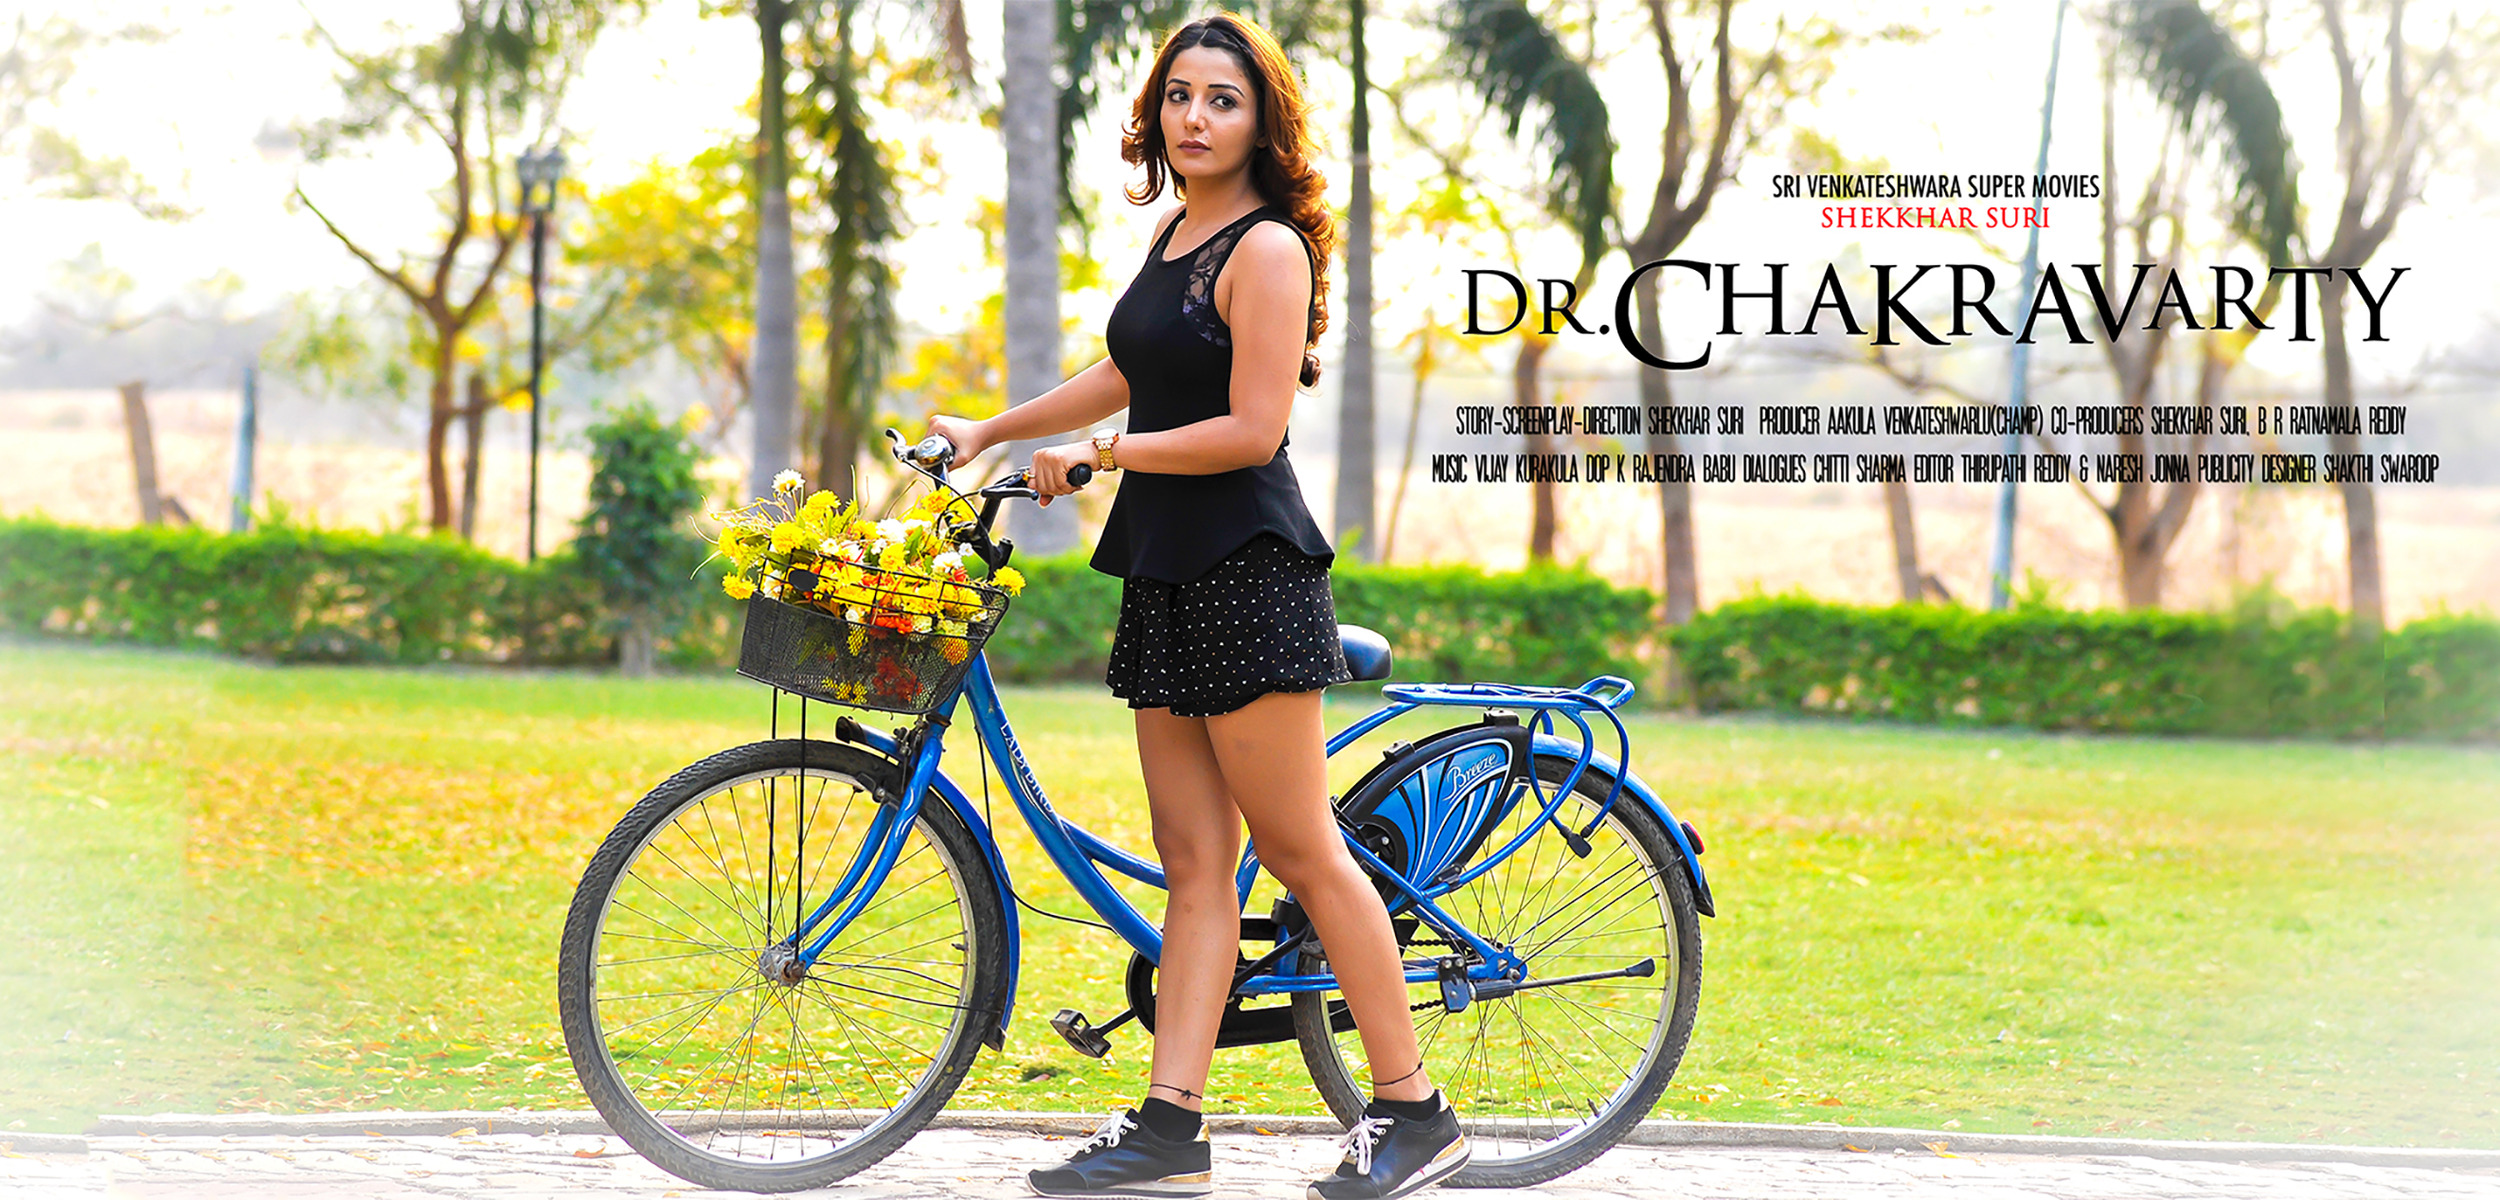 Mega Sized Movie Poster Image for Dr. Chakravarty (#12 of 14)